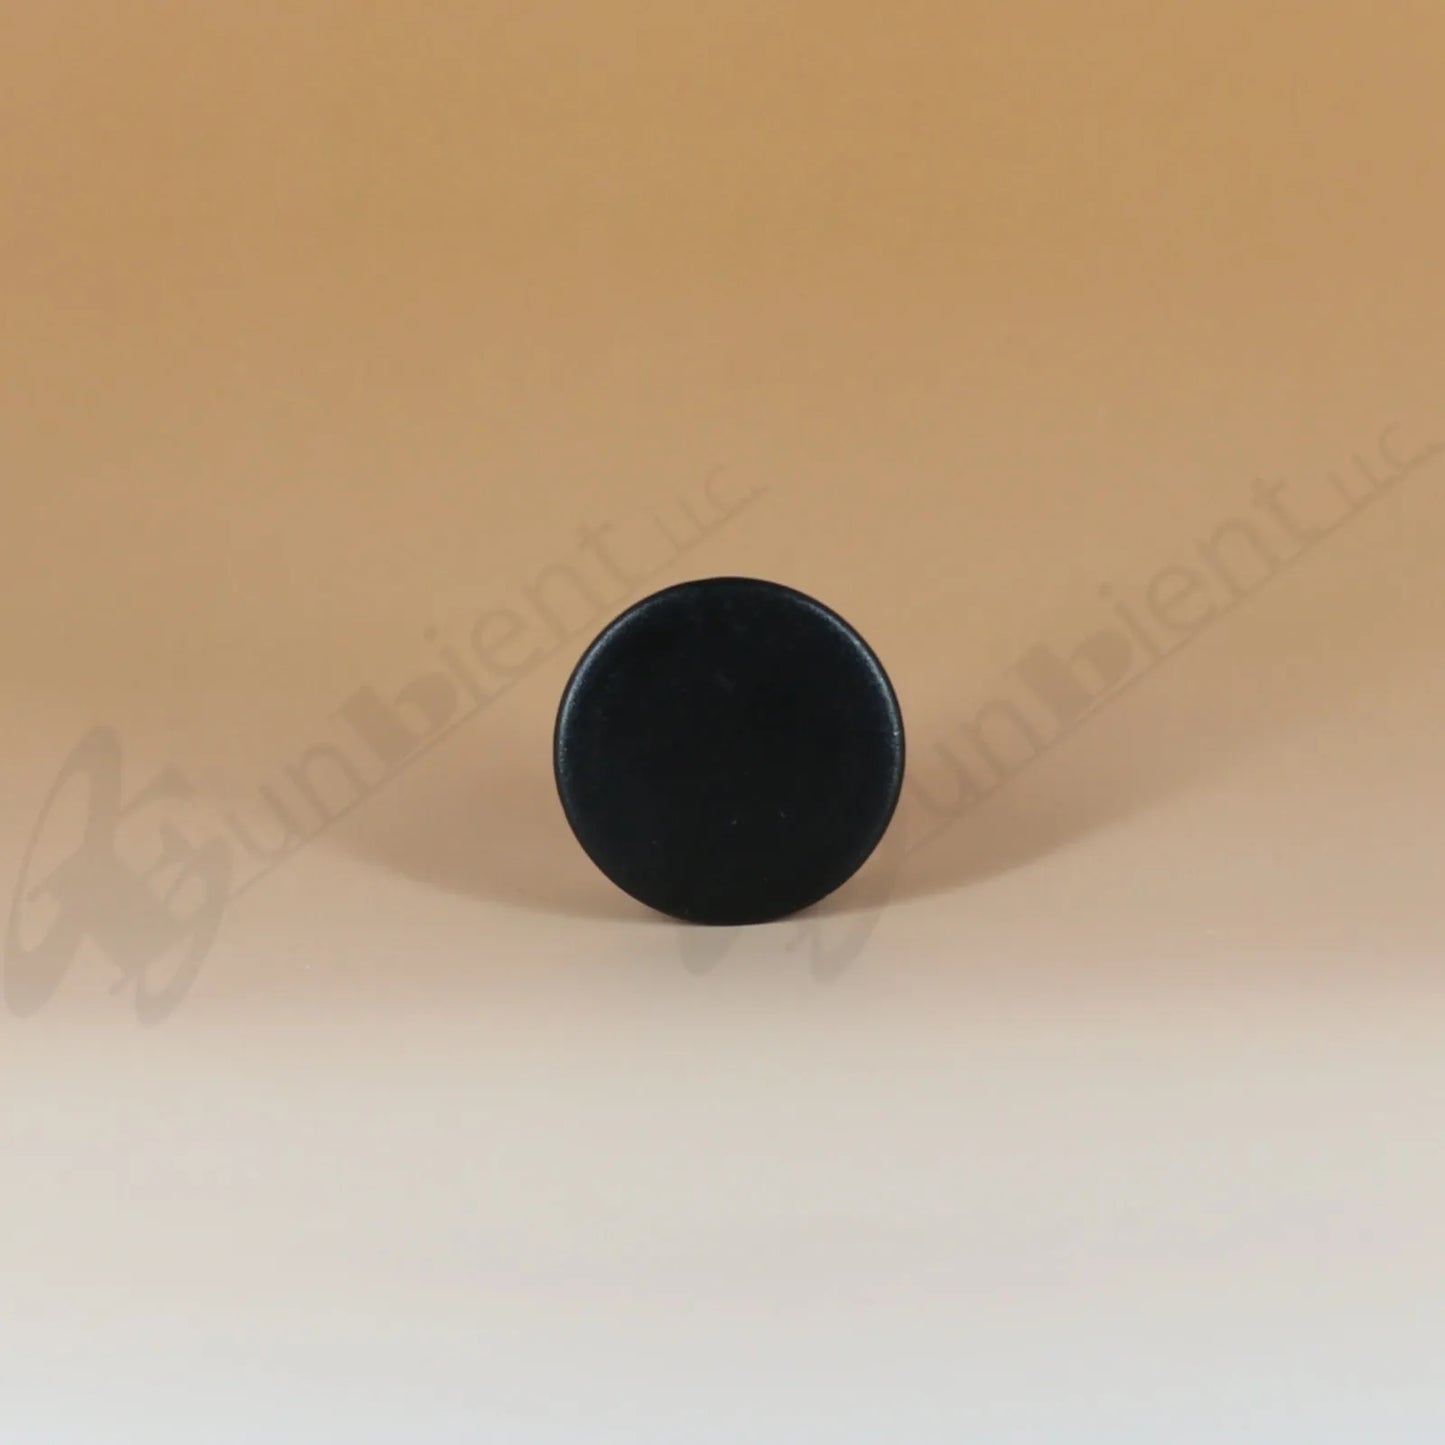 Sanwa Seimitsu Button Hole Cap Plug 30mm for Jamma Candy Cabinet OBSM clip type